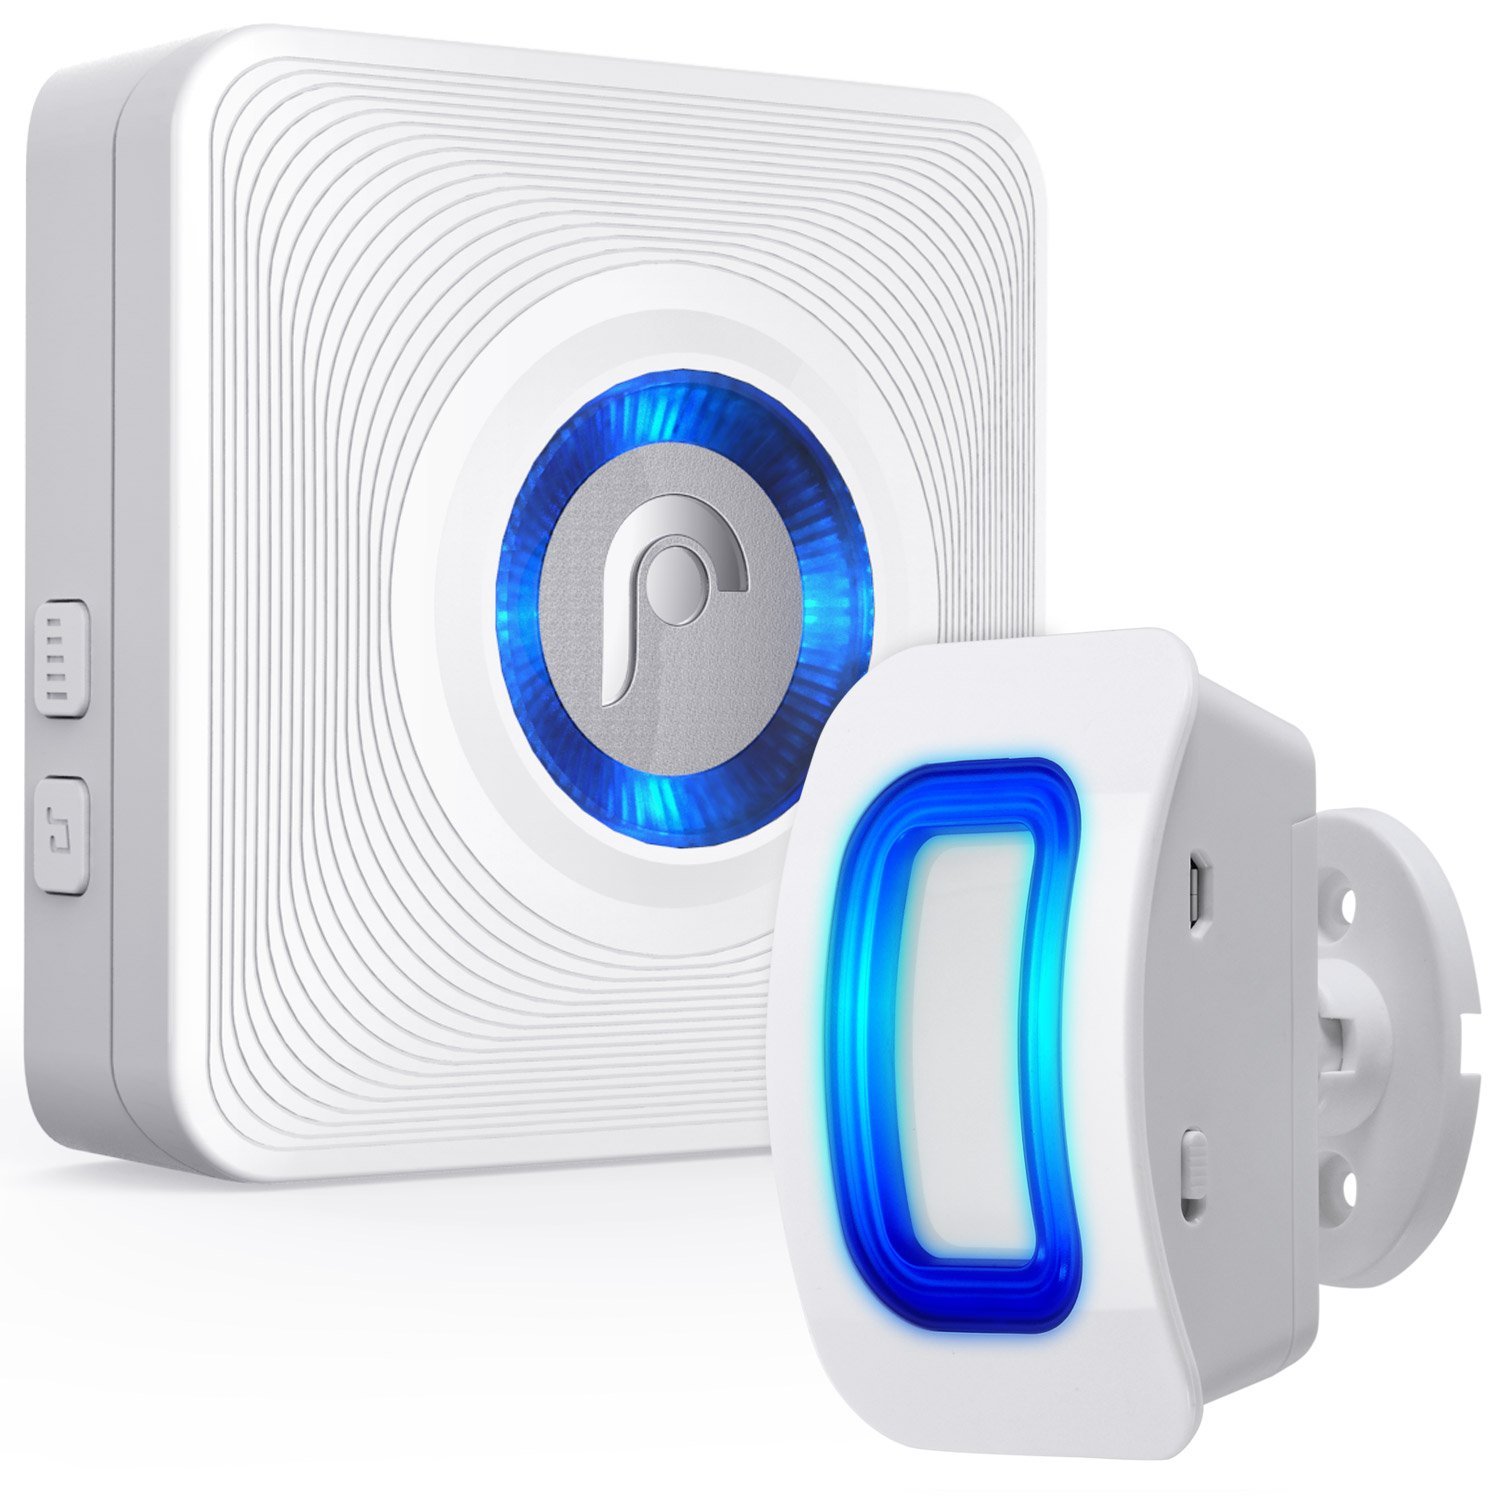 Fosmon WaveLink 51005HOM Wireless Home Security Driveway Alarm, Motion Sensor Detect Alert, Store Door Entry Chime